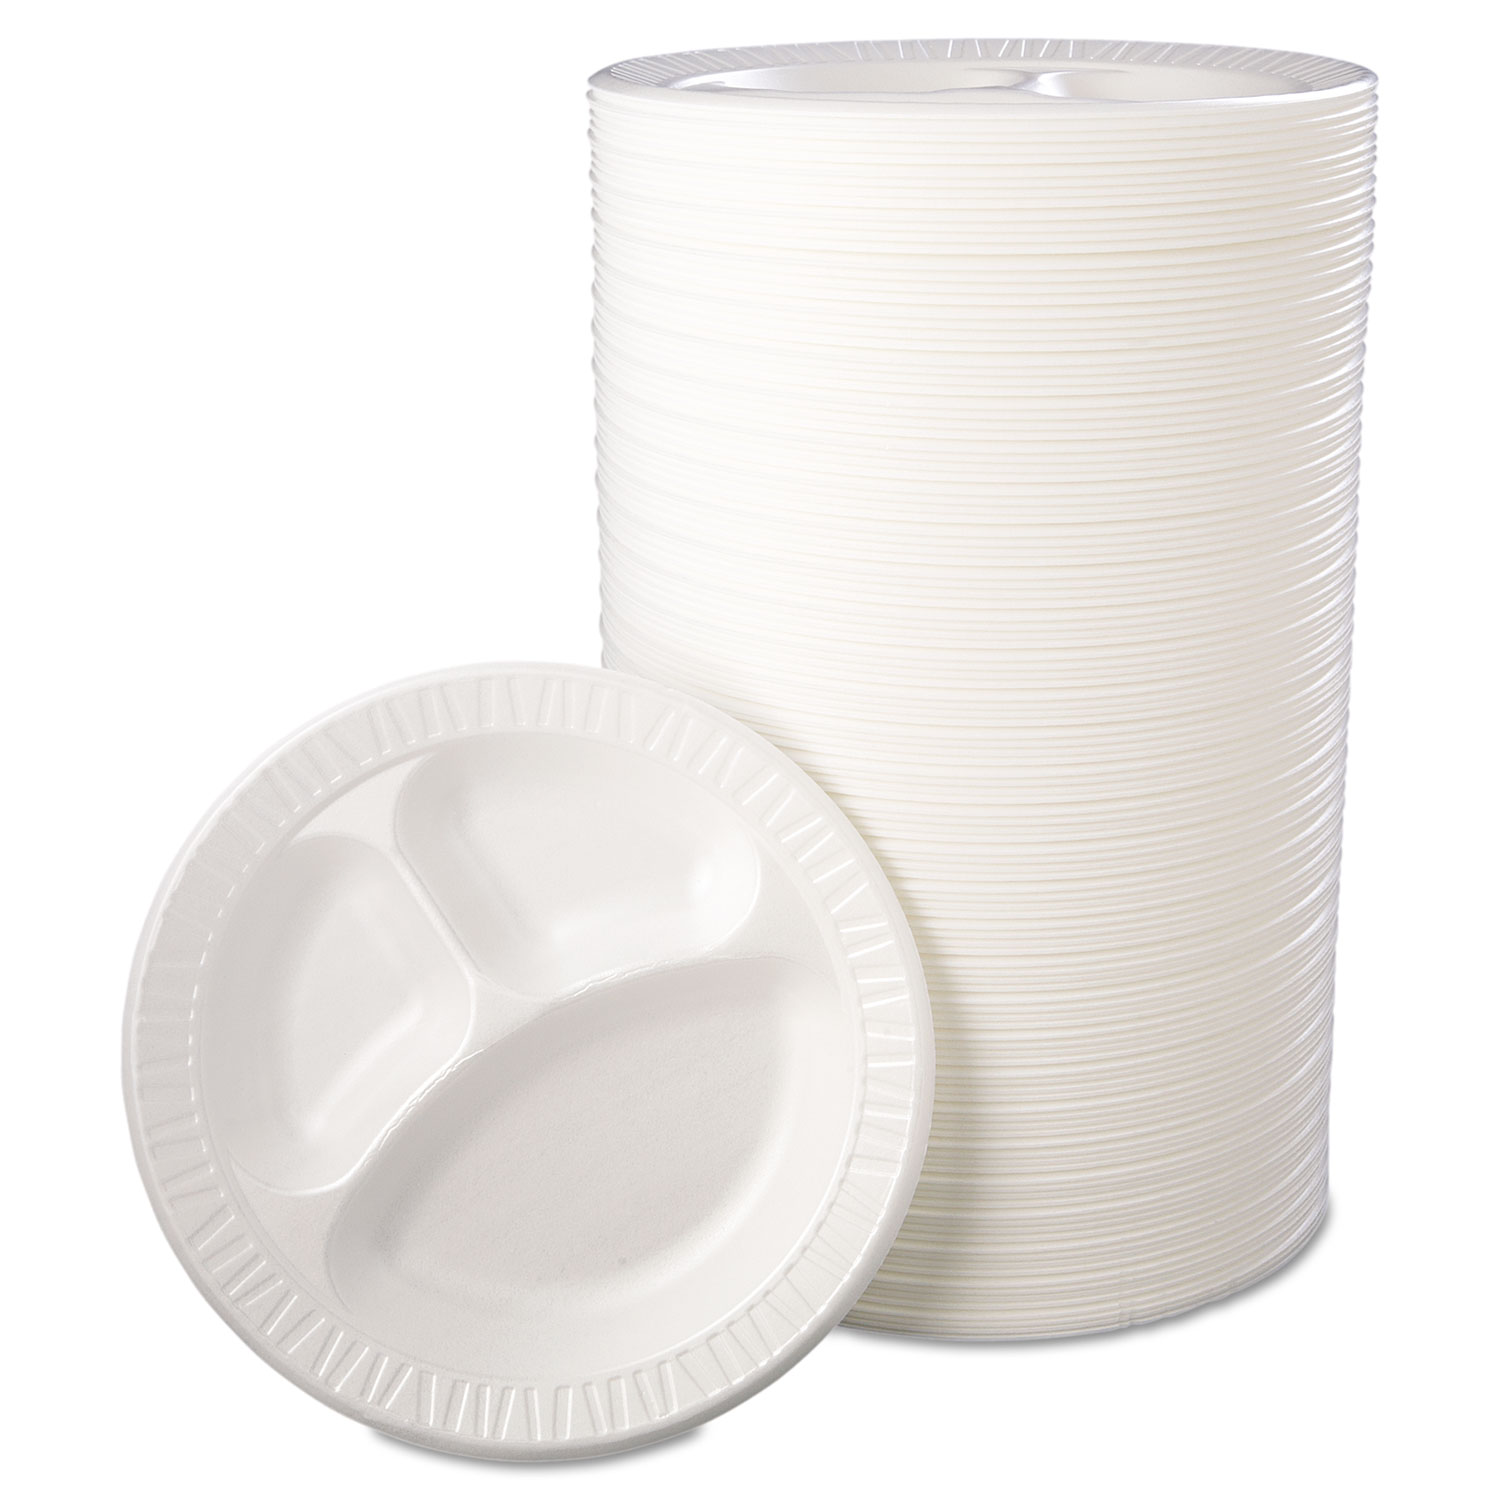 Pactiv Laminated Foam Dinnerware, 3-Compartment Plate, 10.25 Diameter,  White, 540/Carton